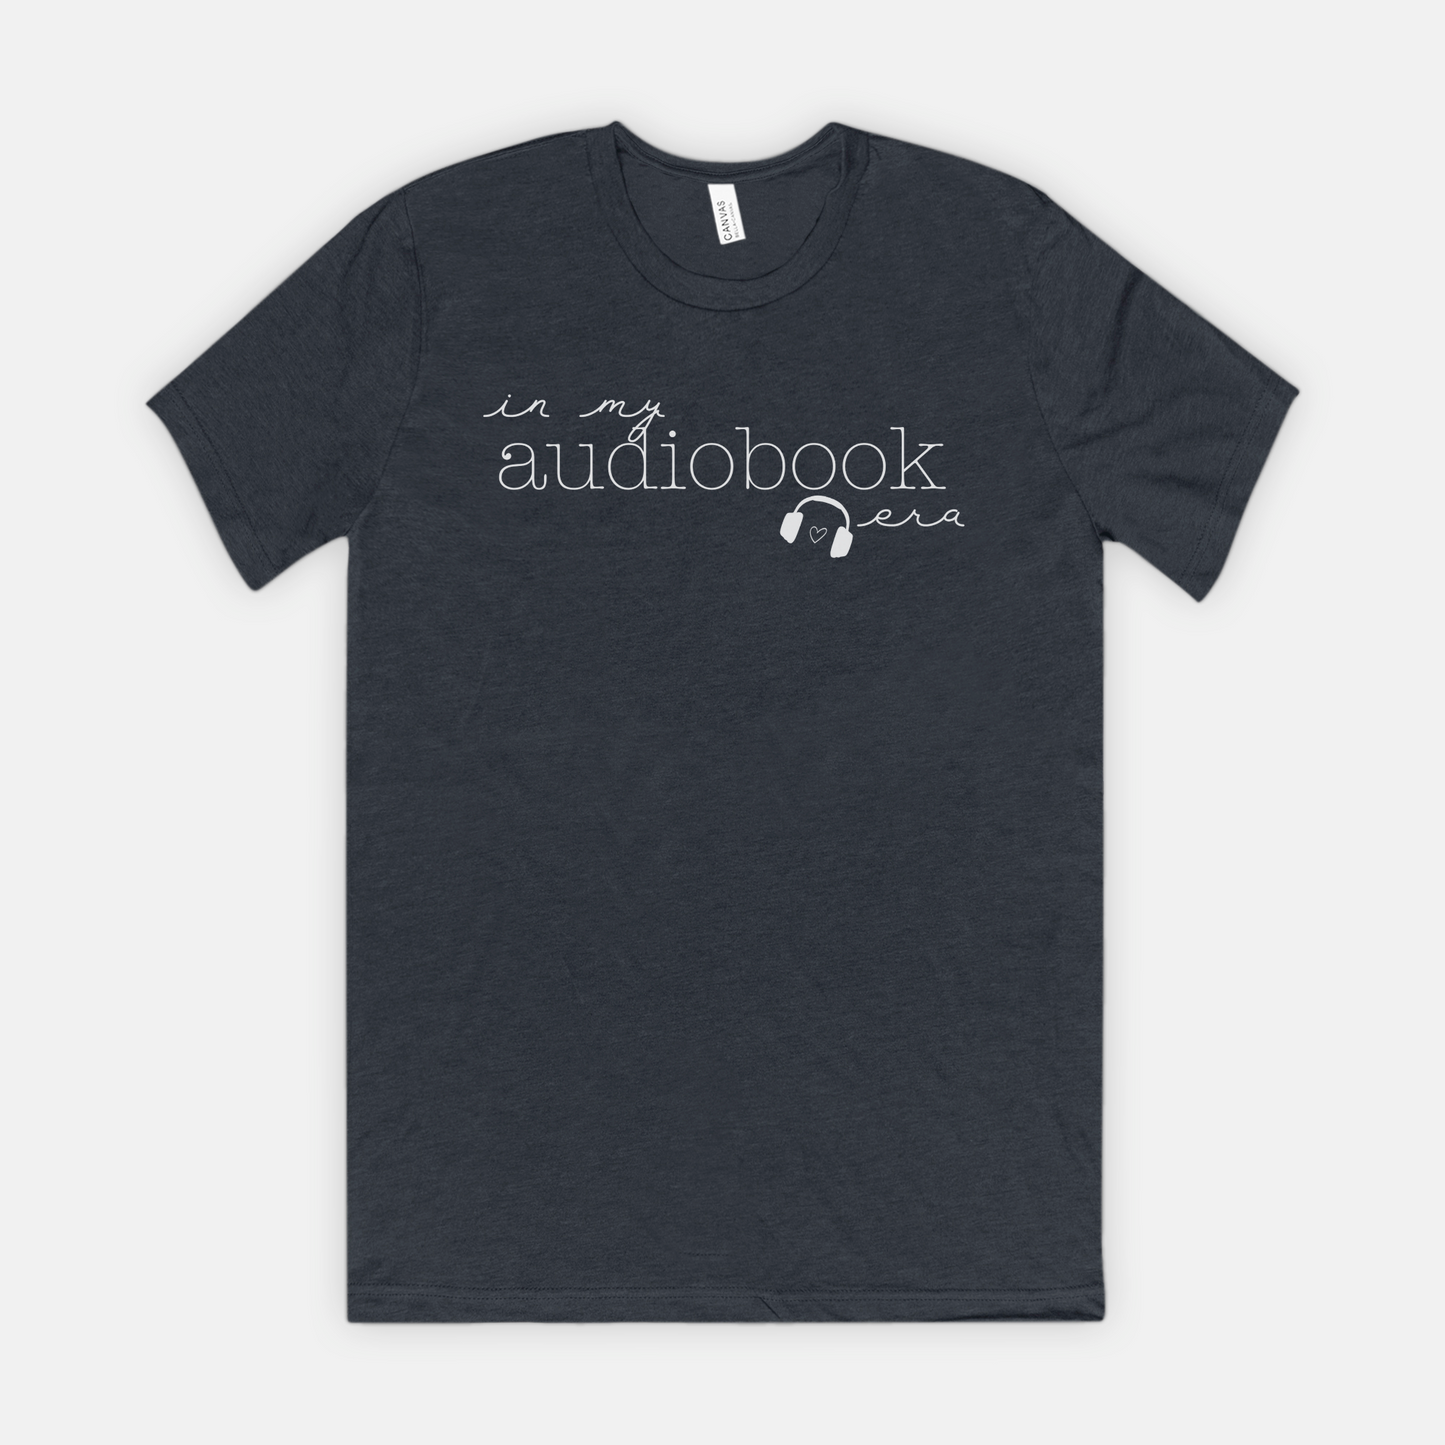 Audiobook Era - Bookish Eras - Tee